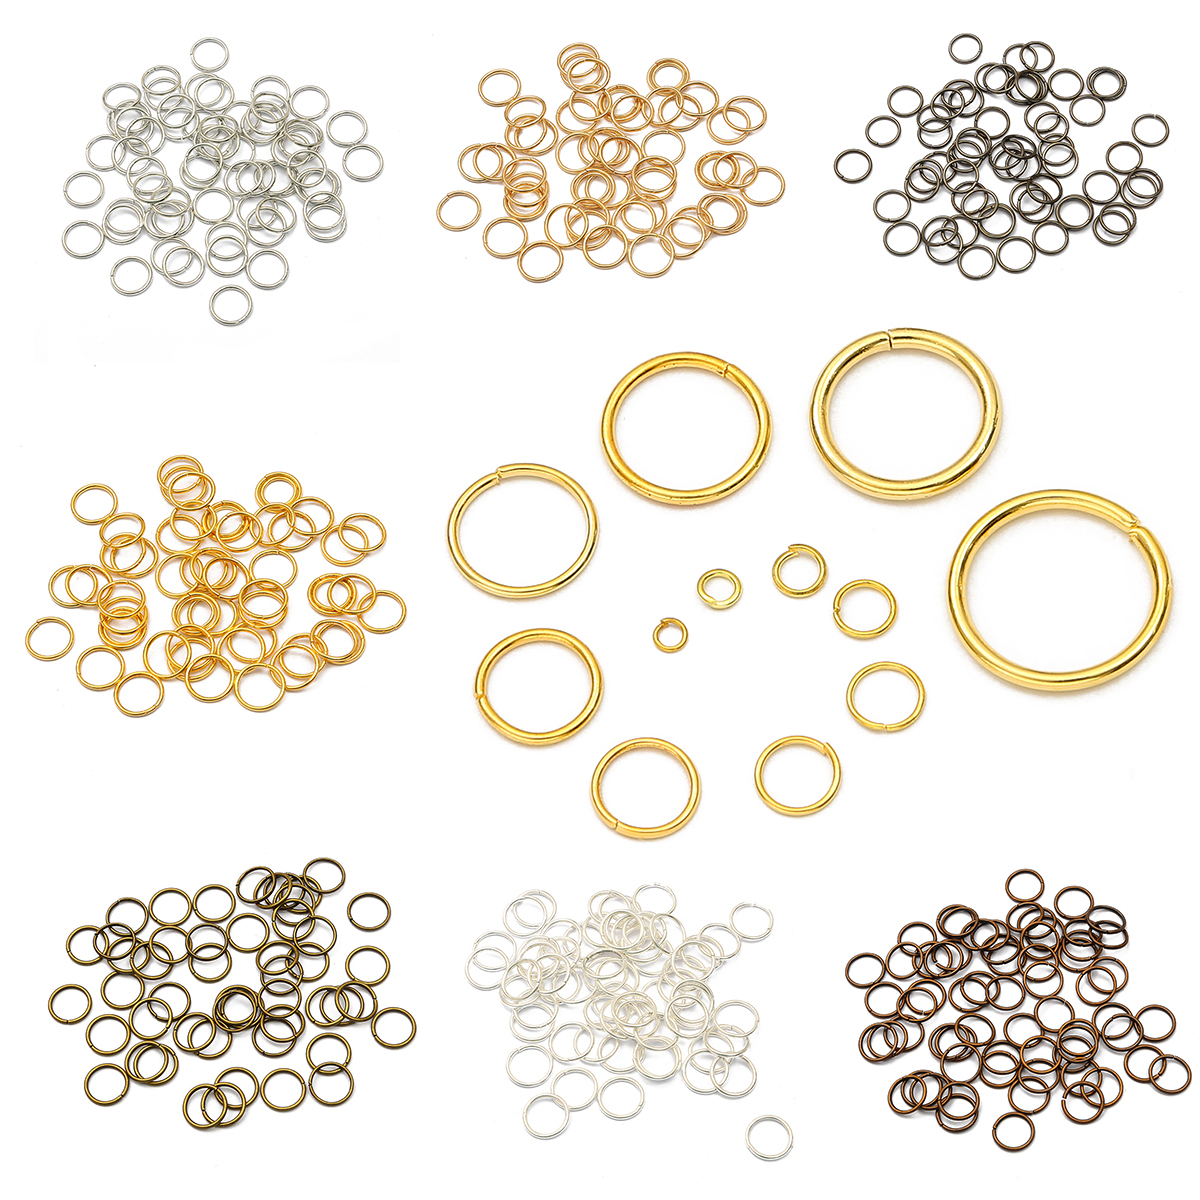 Lot 50-500Pcs Steel Loop Split Jump Rings Connectors Jewelry Finding 4-14mm 